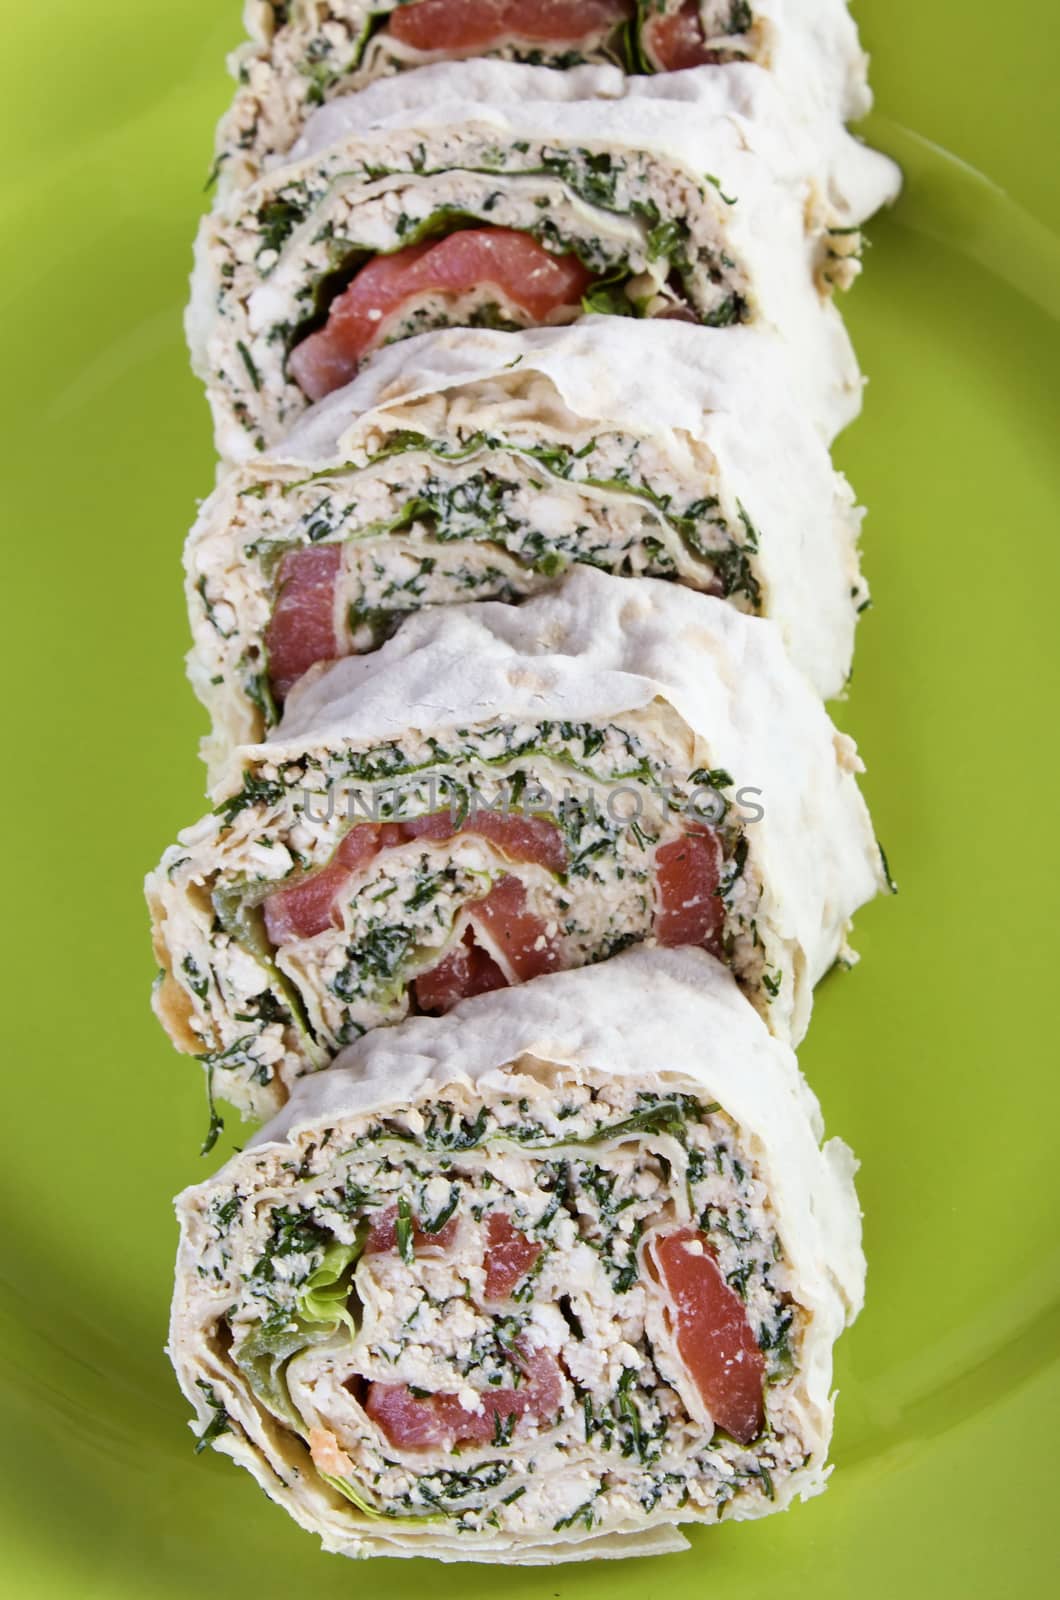 Salmon lavash roll on green plate